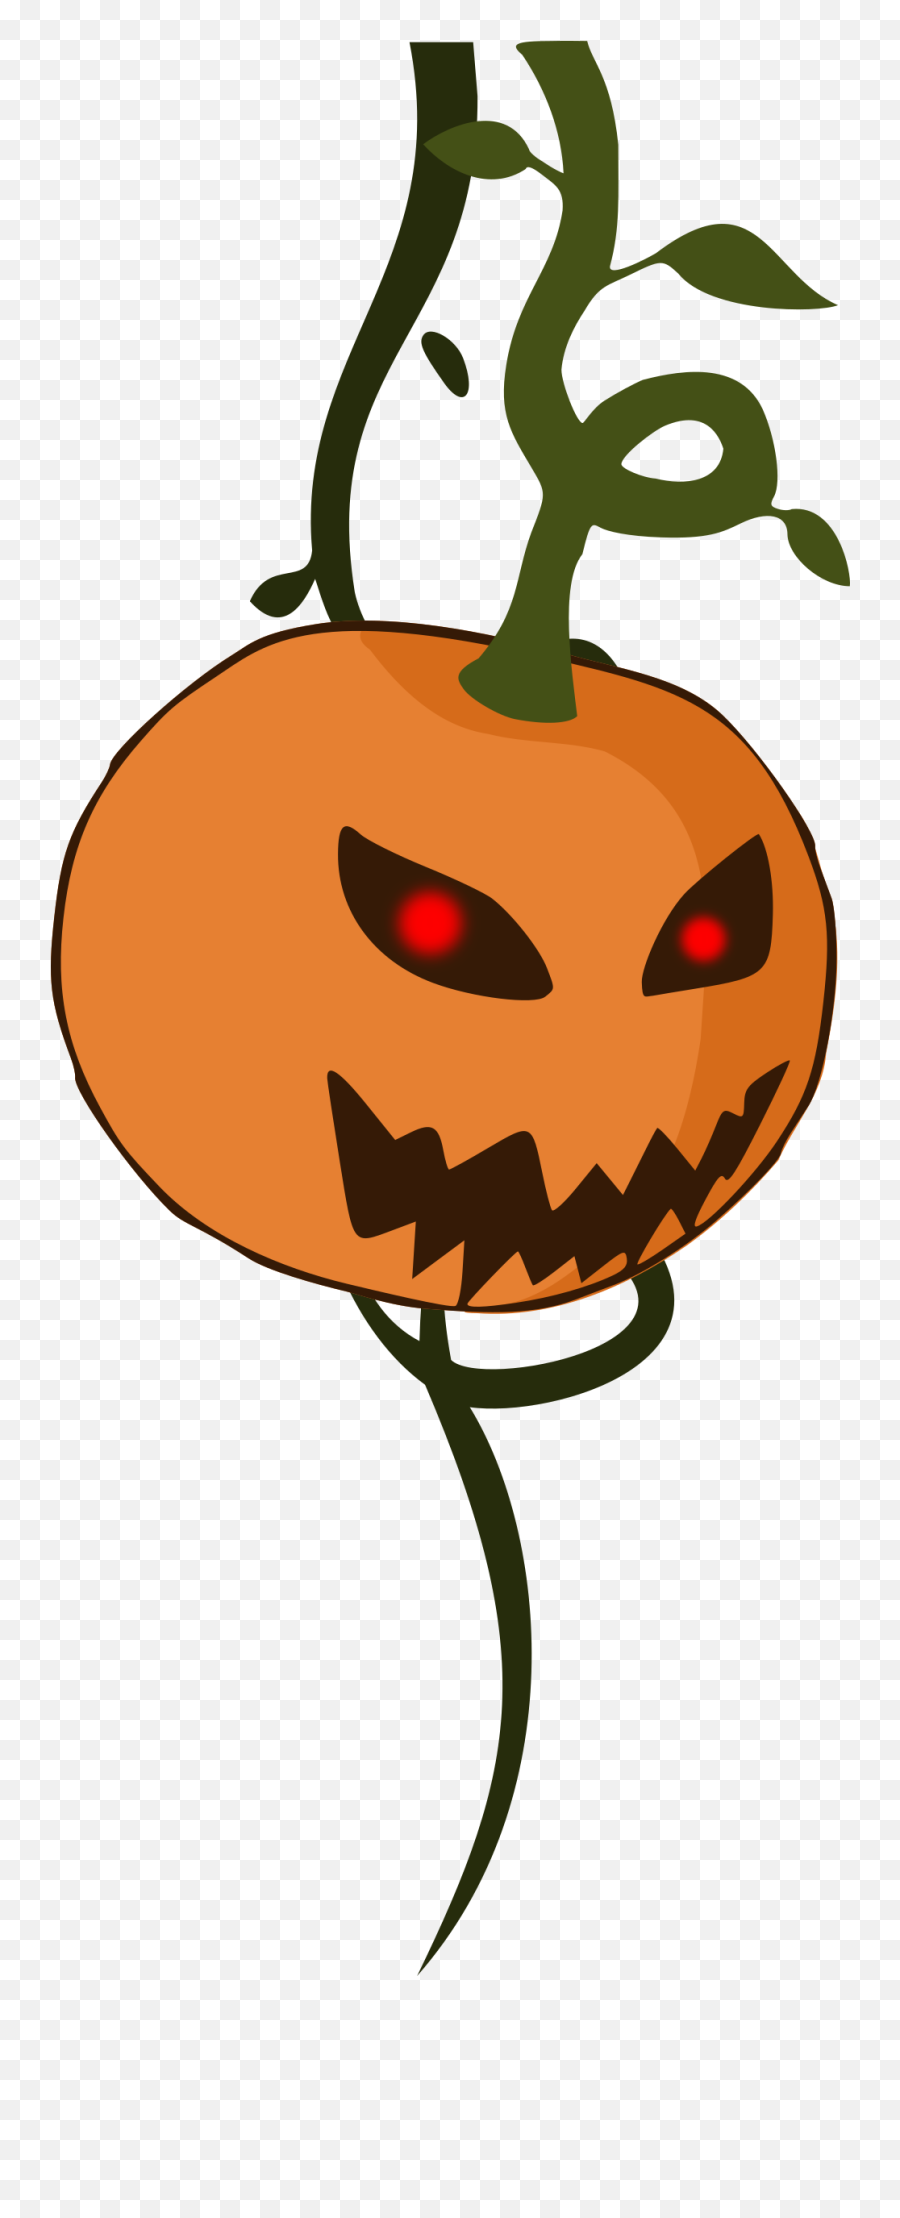 Download Hd Cartoon Jack O Lantern Pumpkin - Halloween Cartoon Jack O Lantern Hanging Emoji,Jack O'lantern Emoji